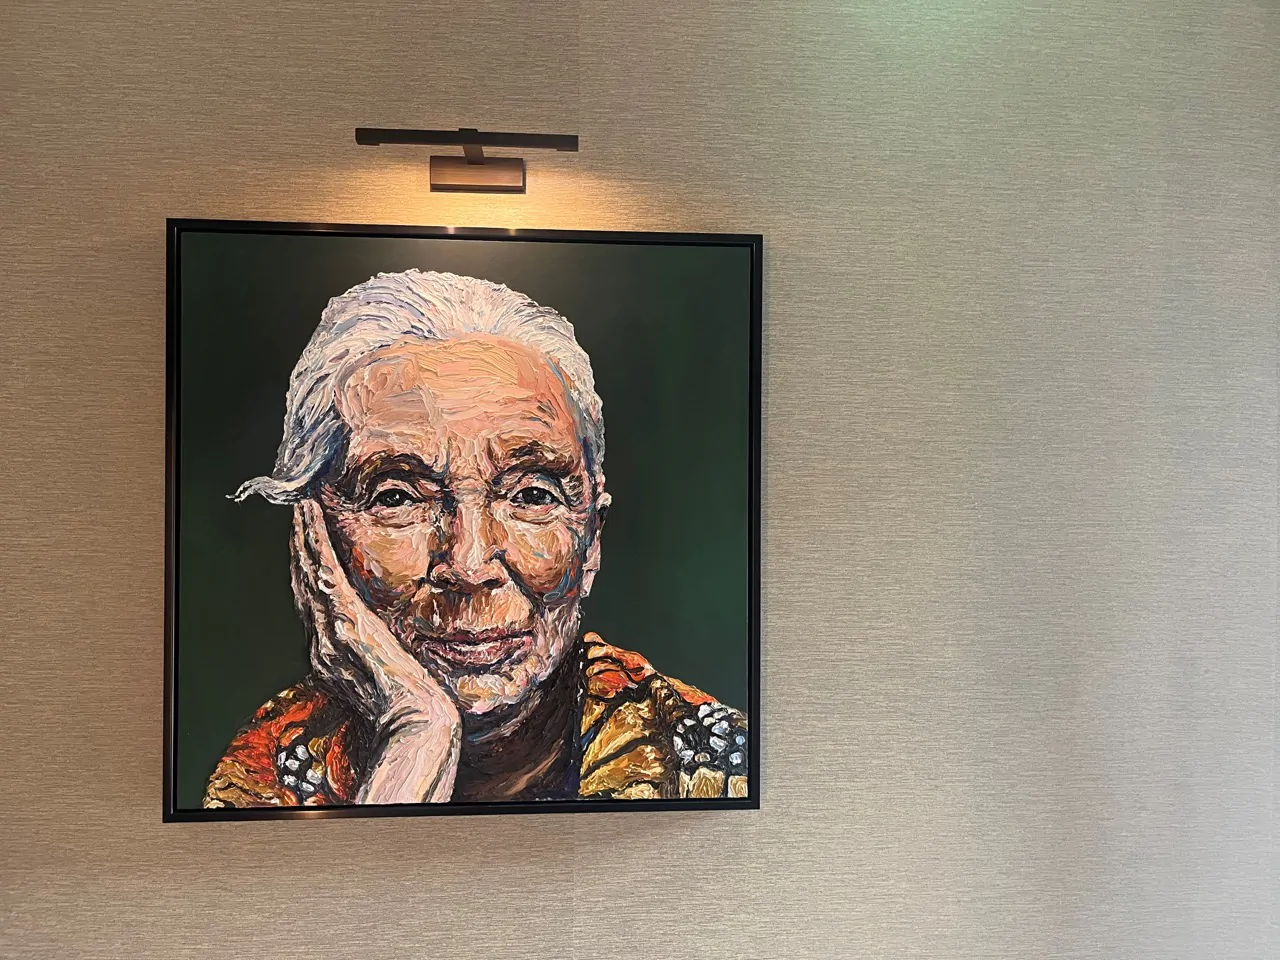 Jane Goodall portrait in Cambridge Hotel